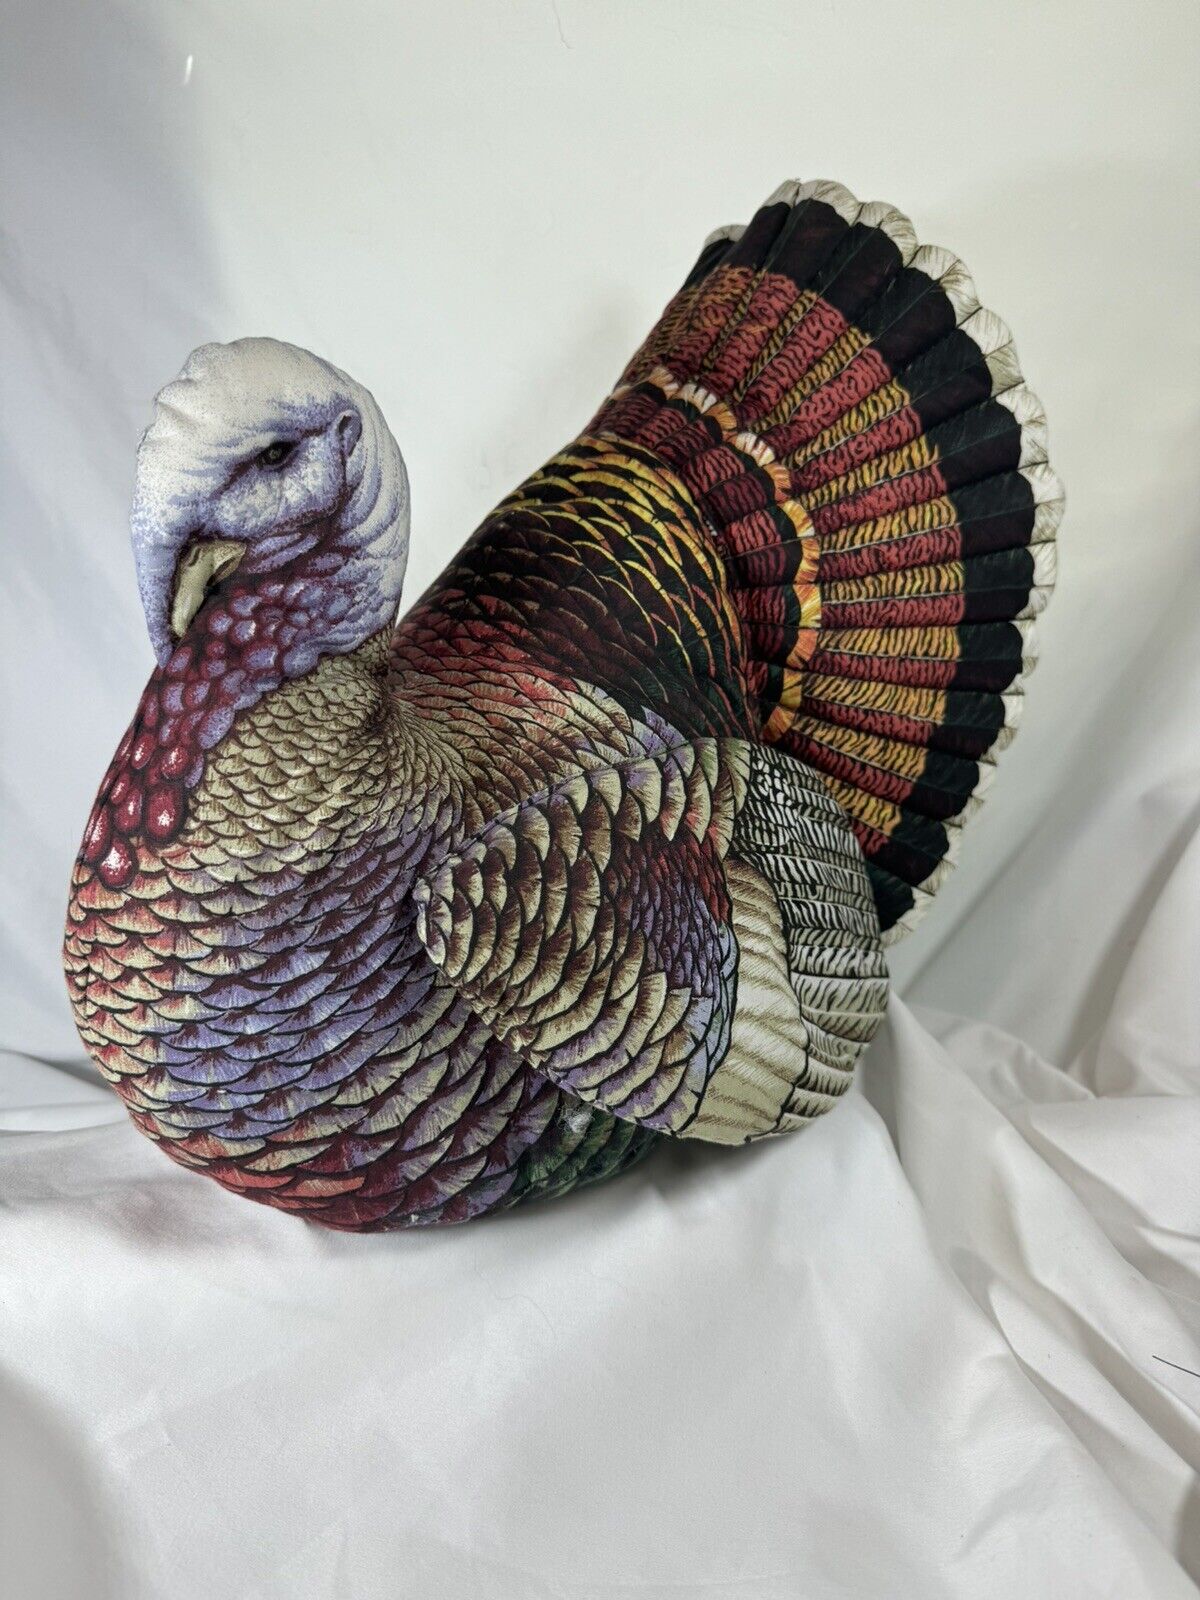 LARGE TOM TURKEY Thanksgiving Centerpiece or Decoration Plush Detailed